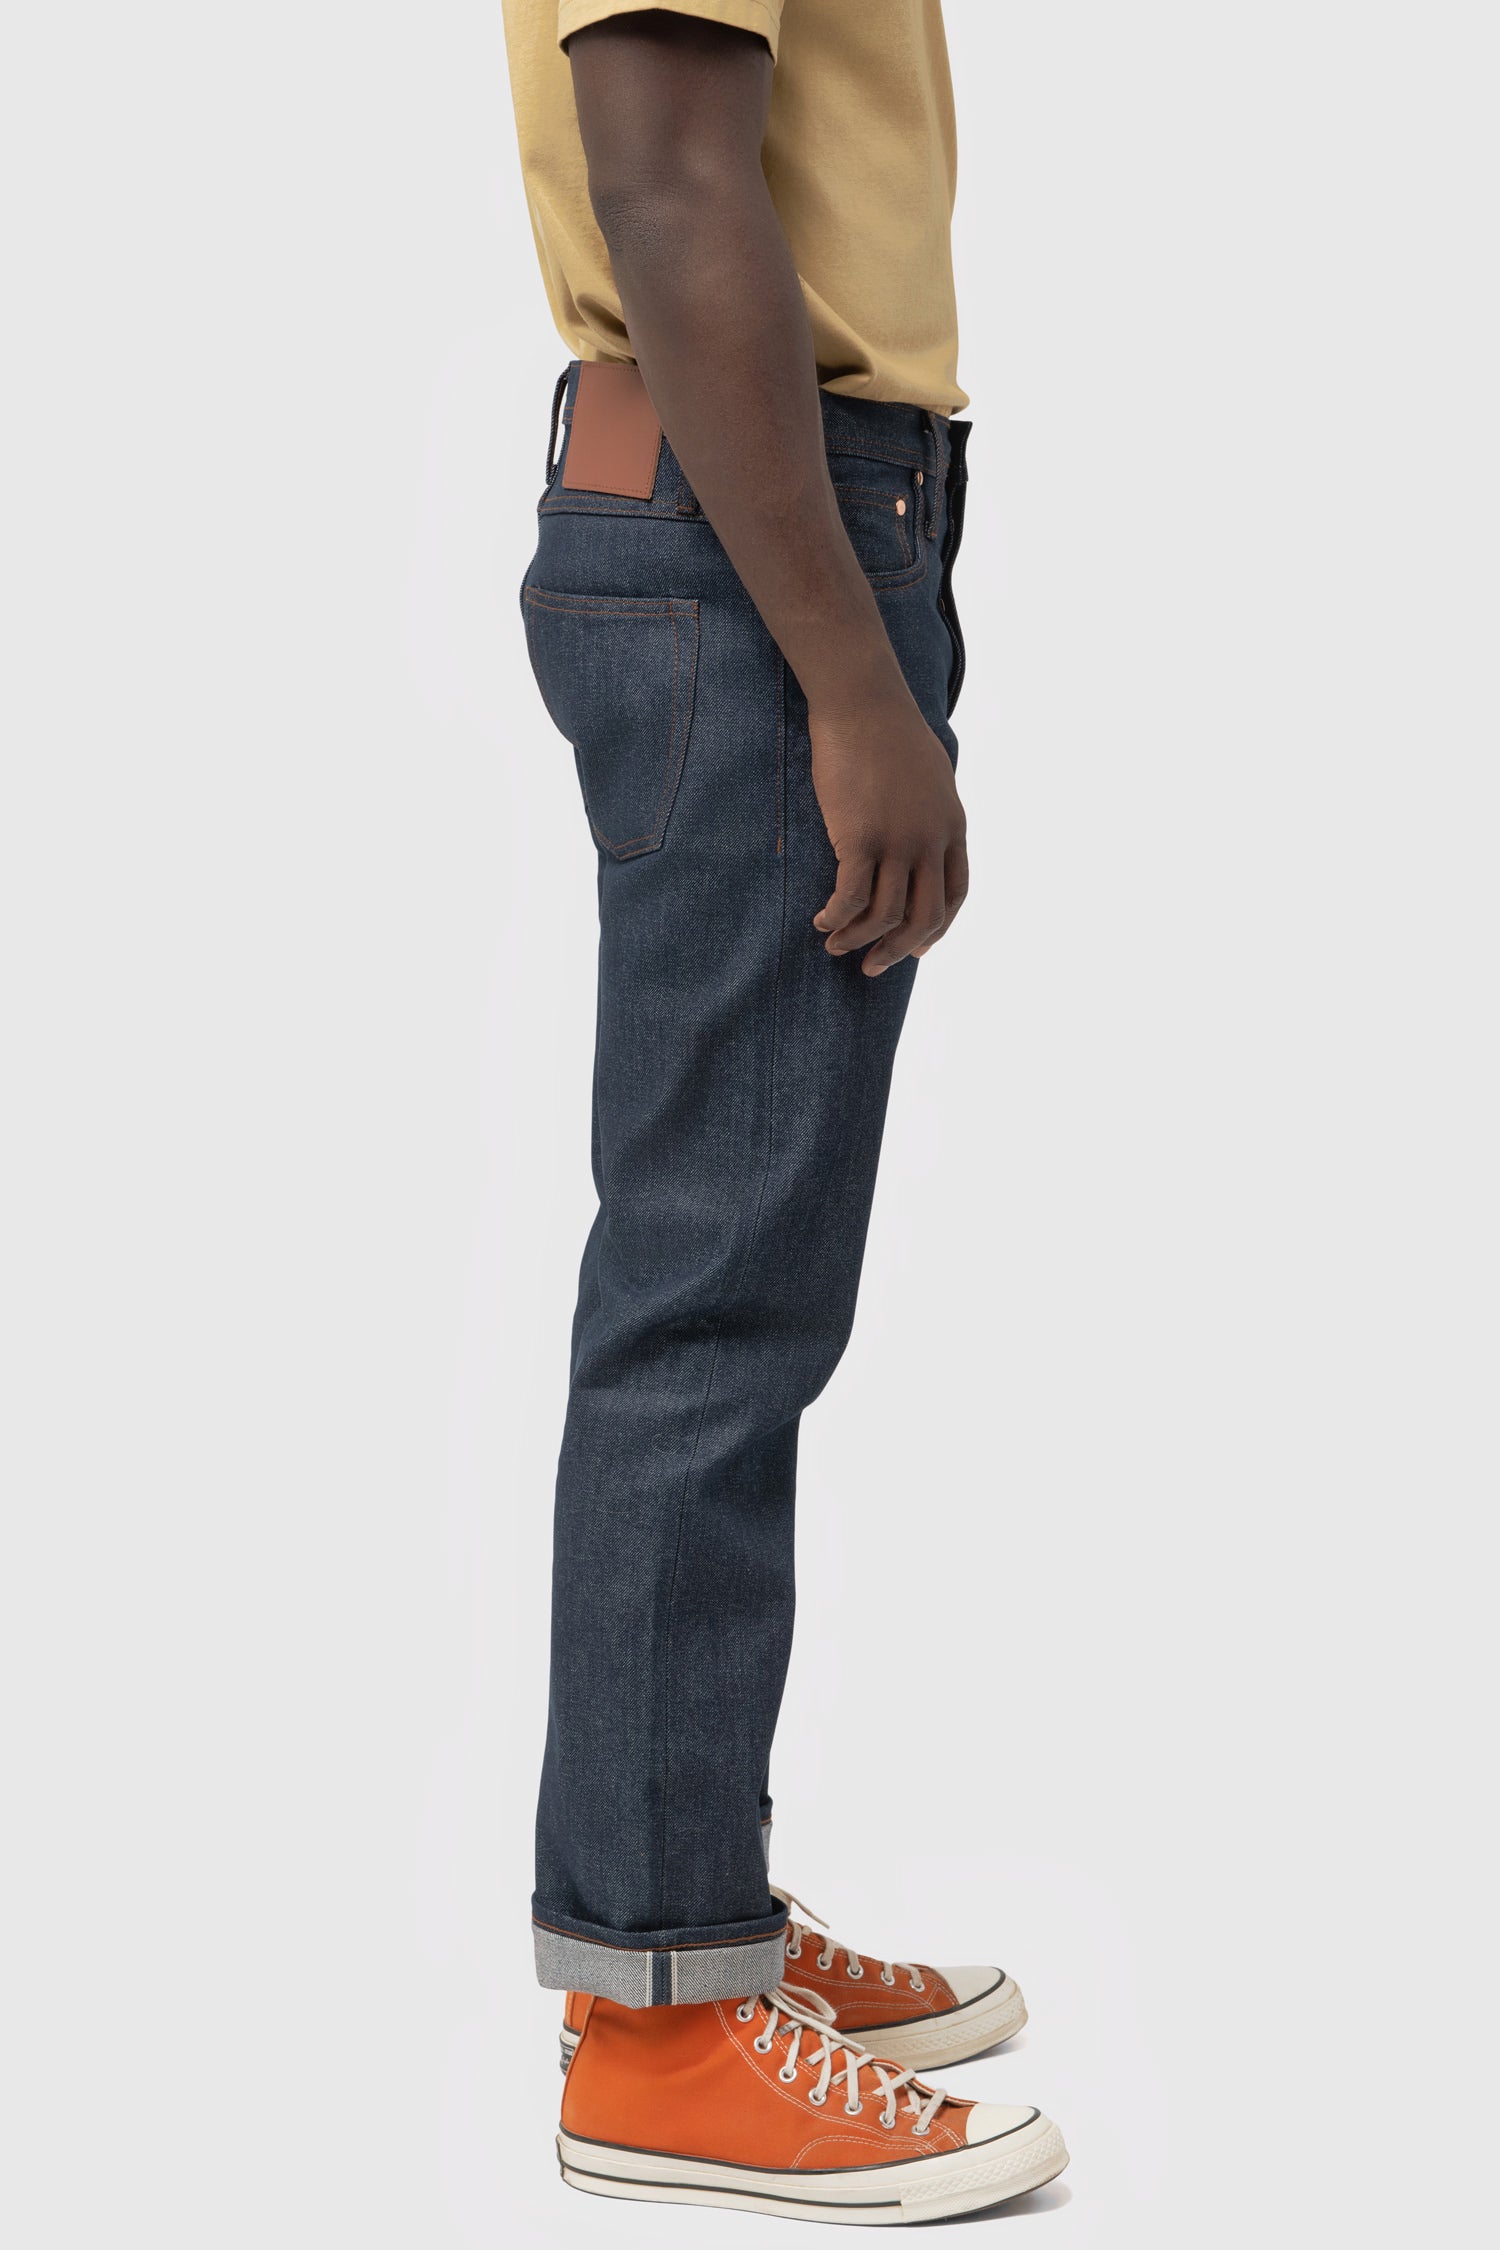 Men's Unbranded Straight Fit Selvedge Jean in Indigo